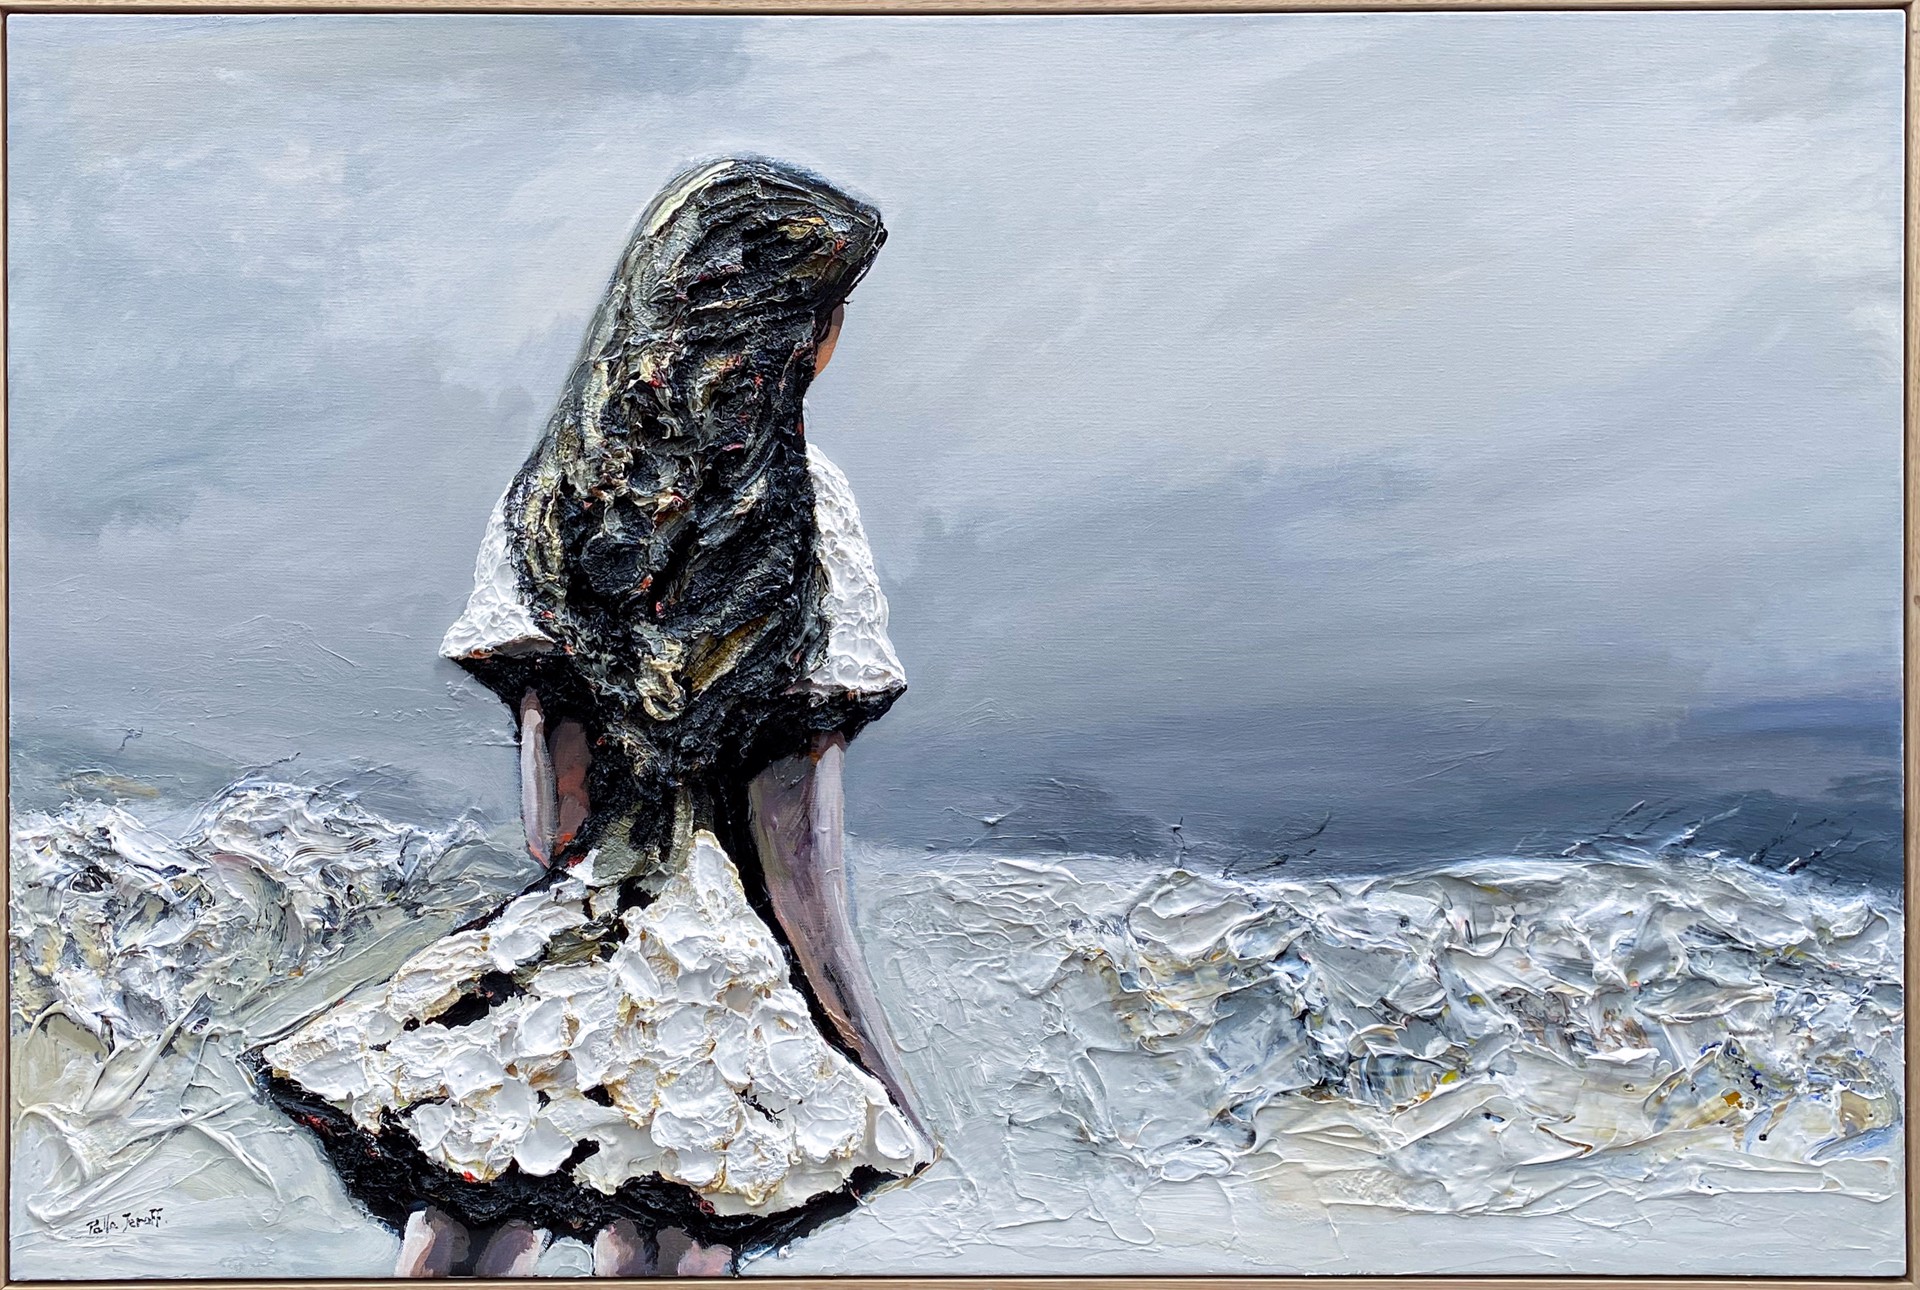 White Desert Girl by Palla Jeroff